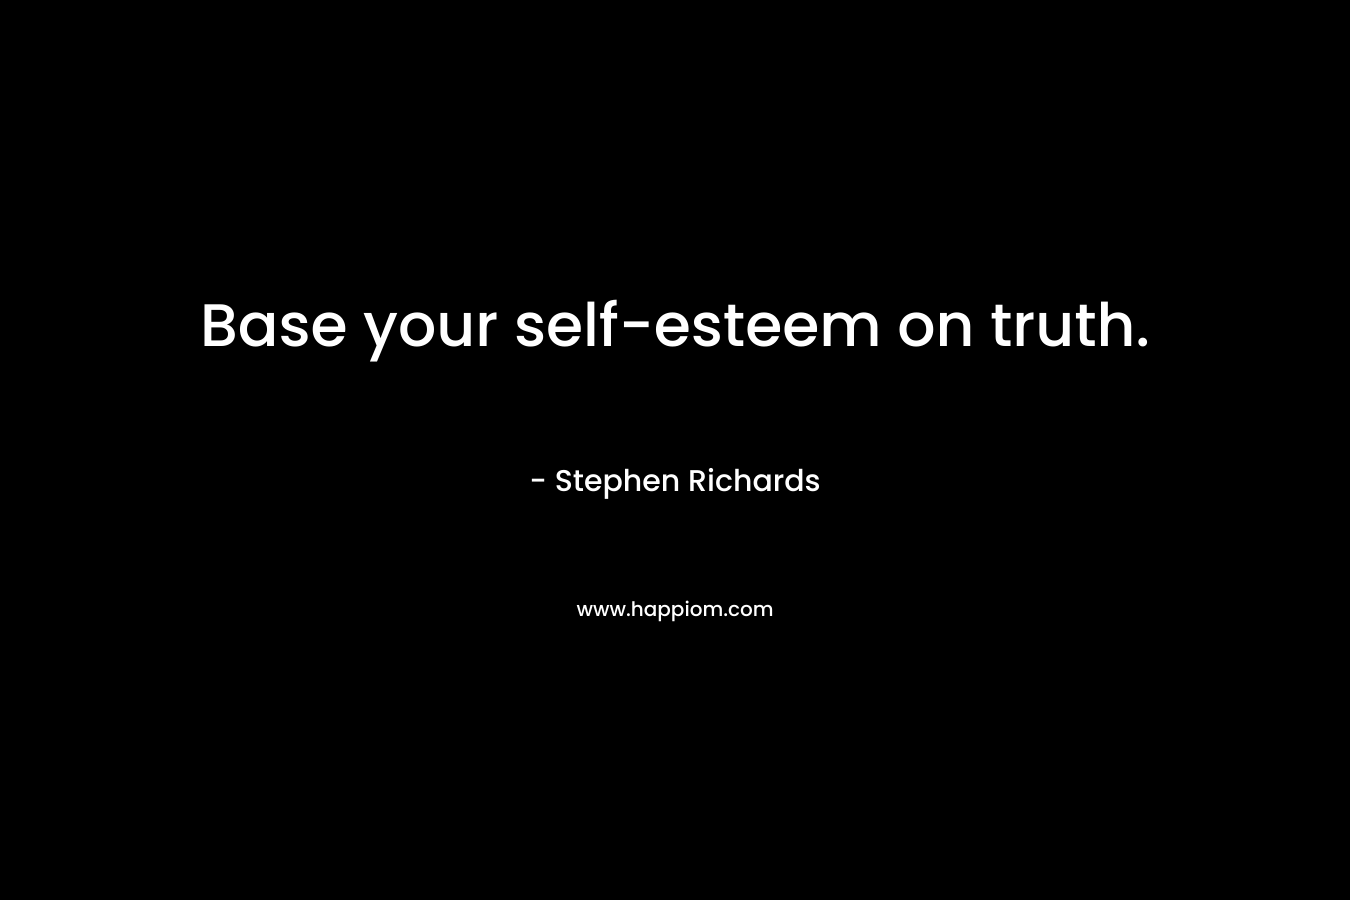 Base your self-esteem on truth.